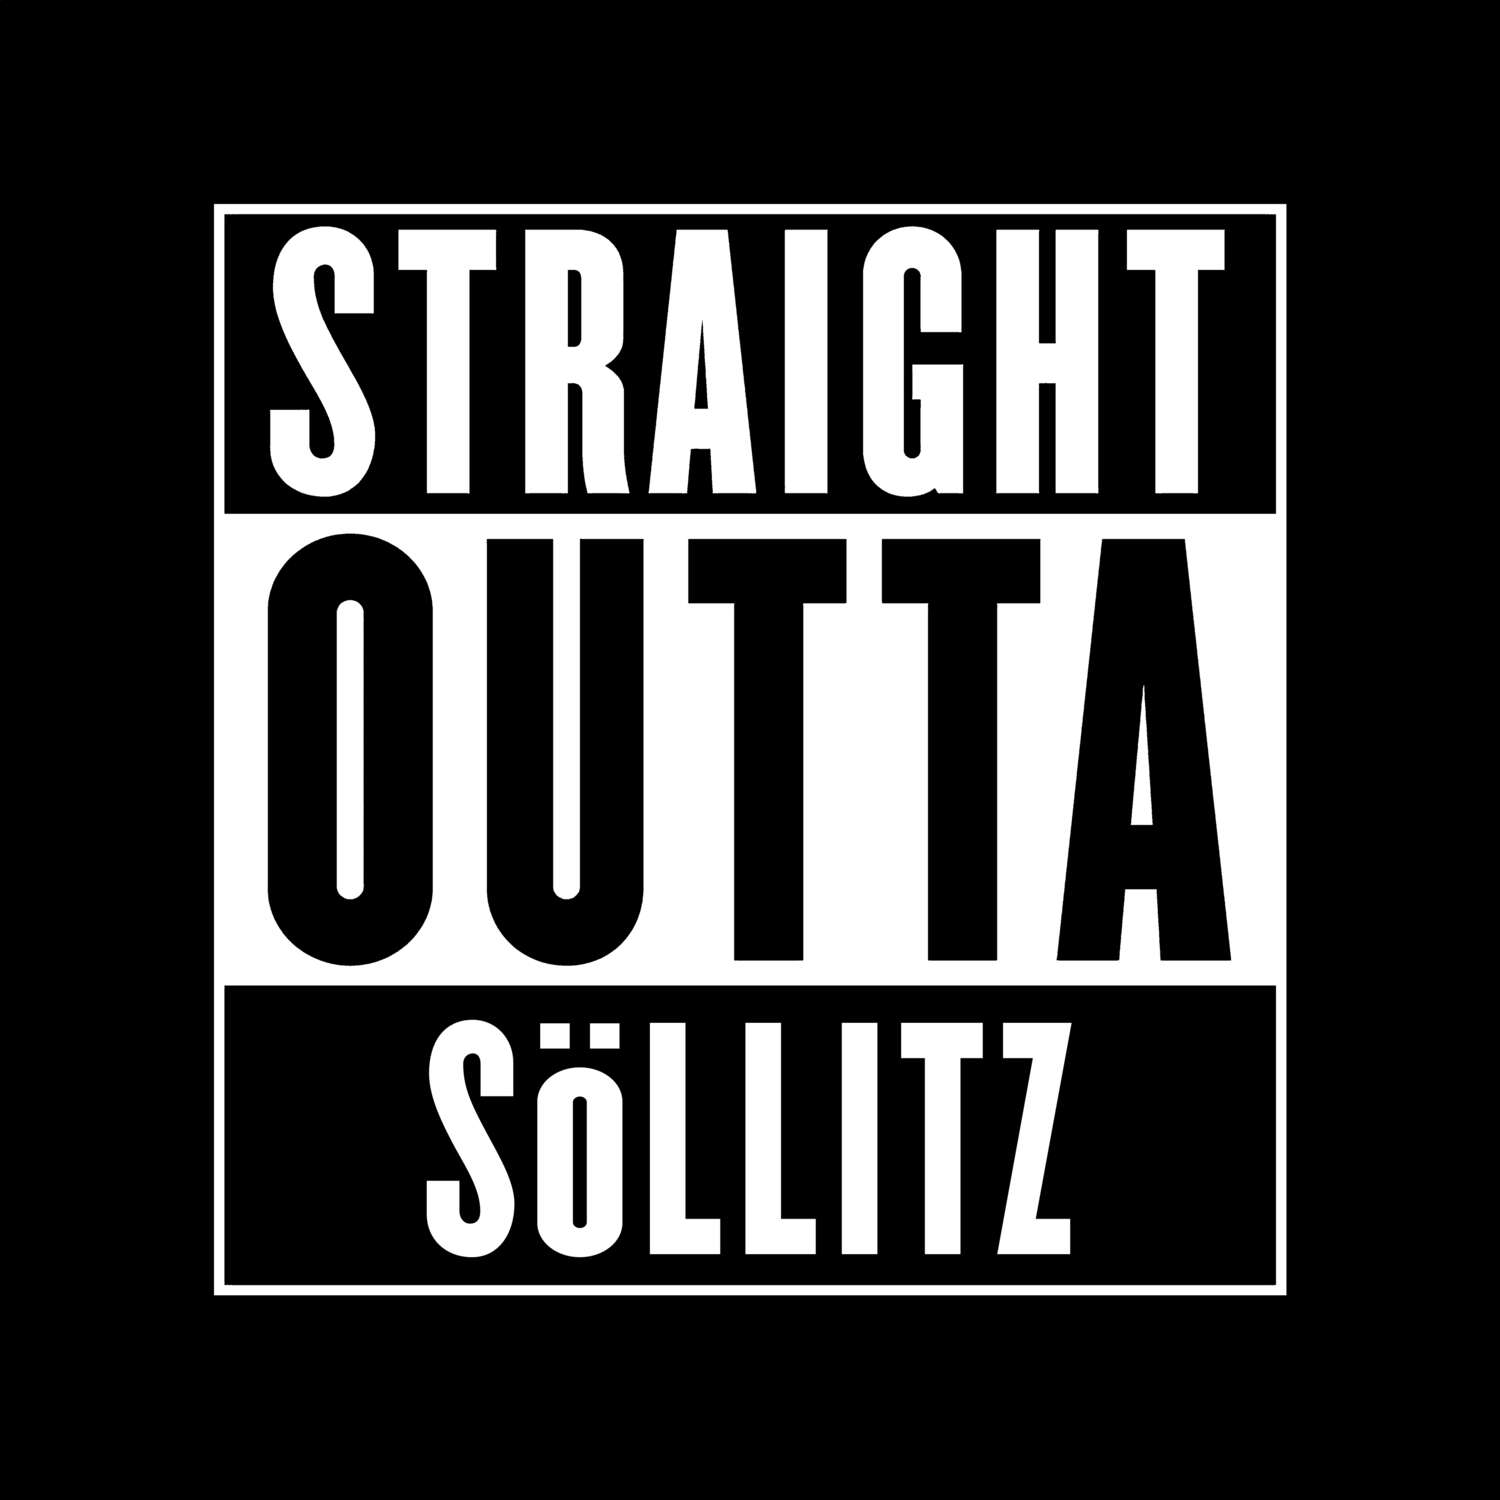 Söllitz T-Shirt »Straight Outta«